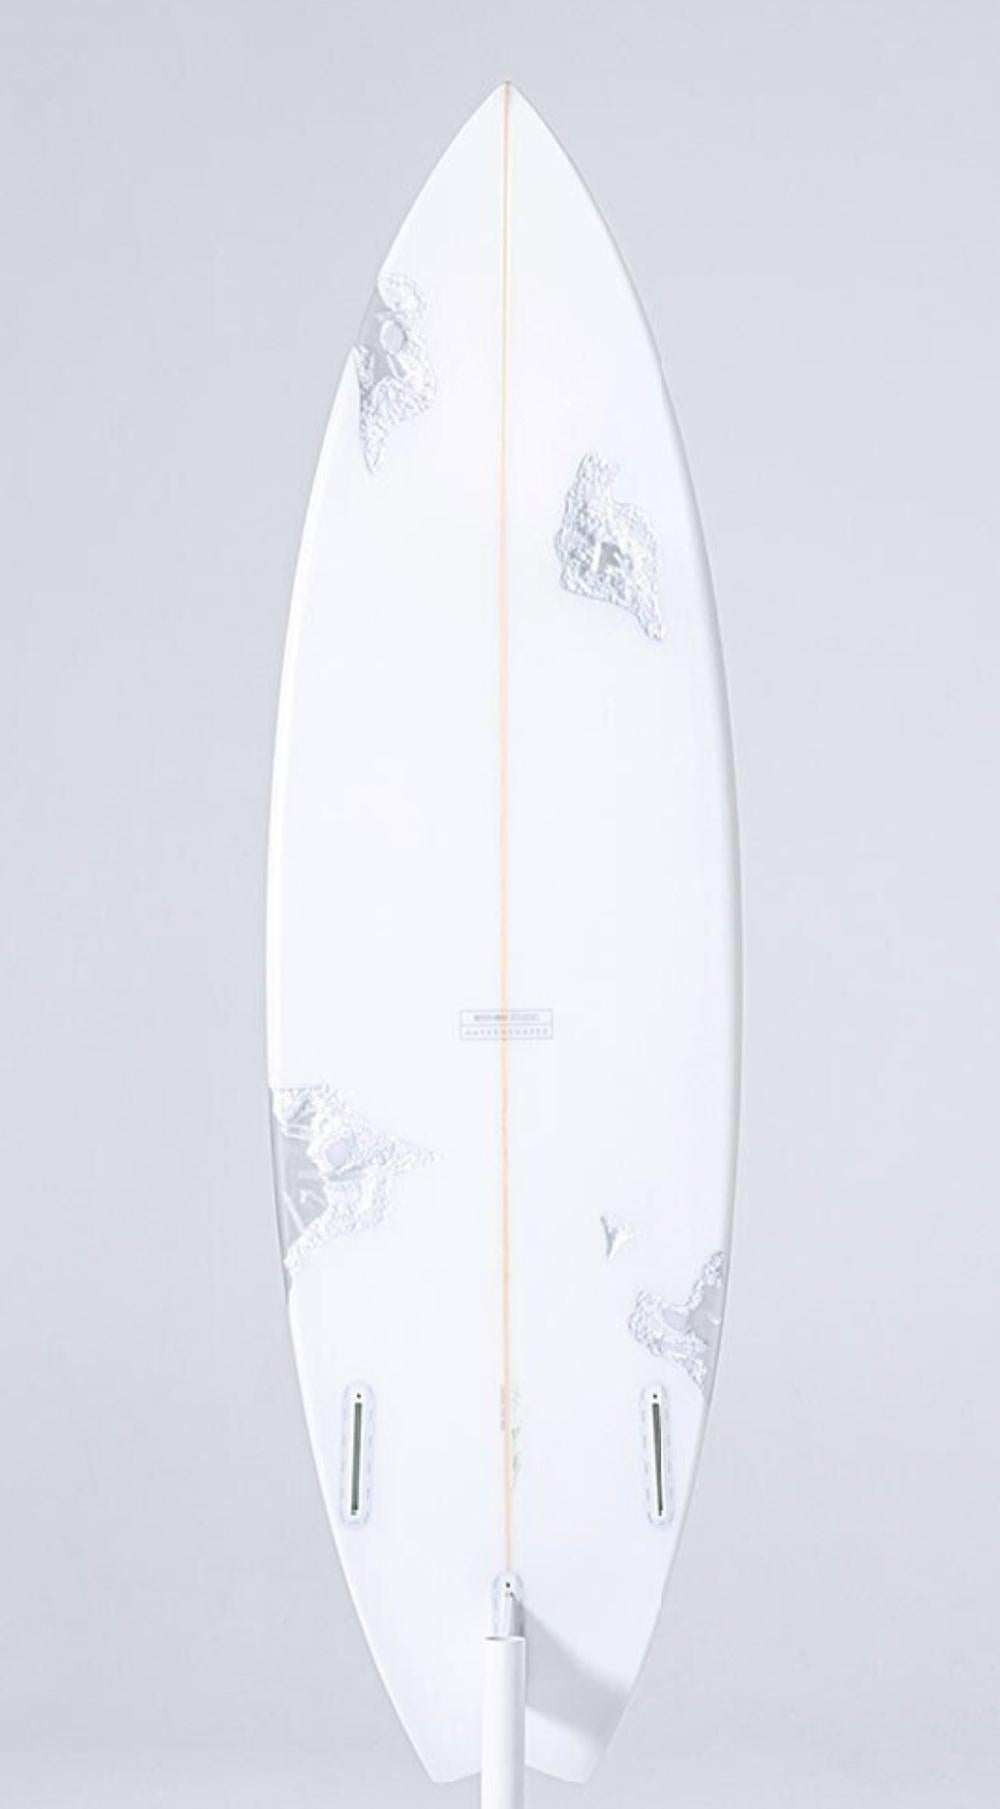 daniel arsham surfboard